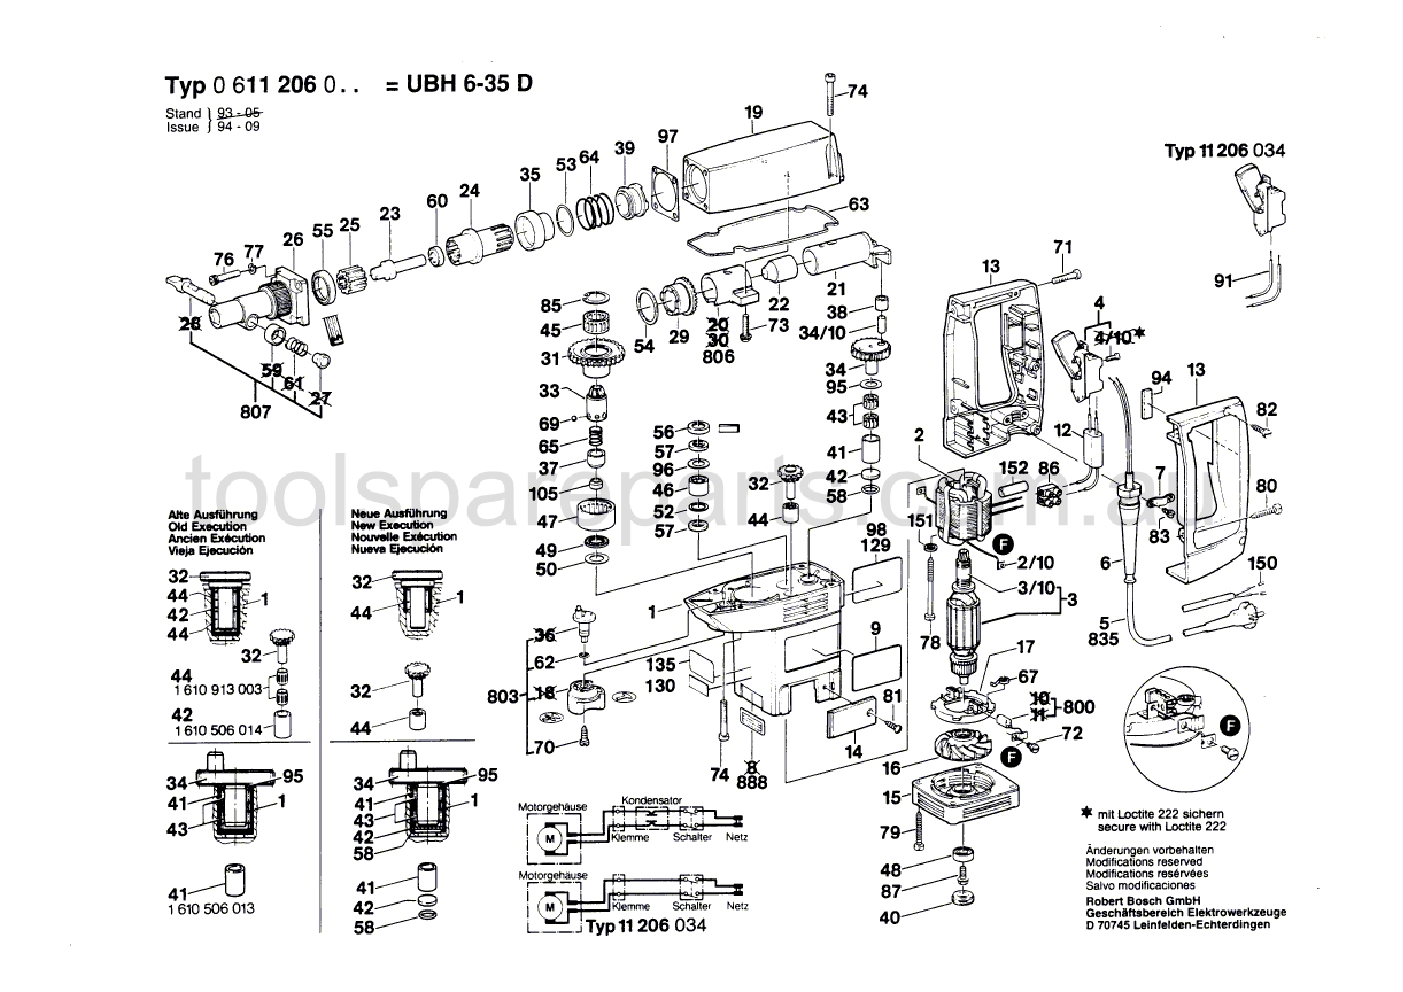 Bosch UBH 6/35 D 0611206037  Diagram 1